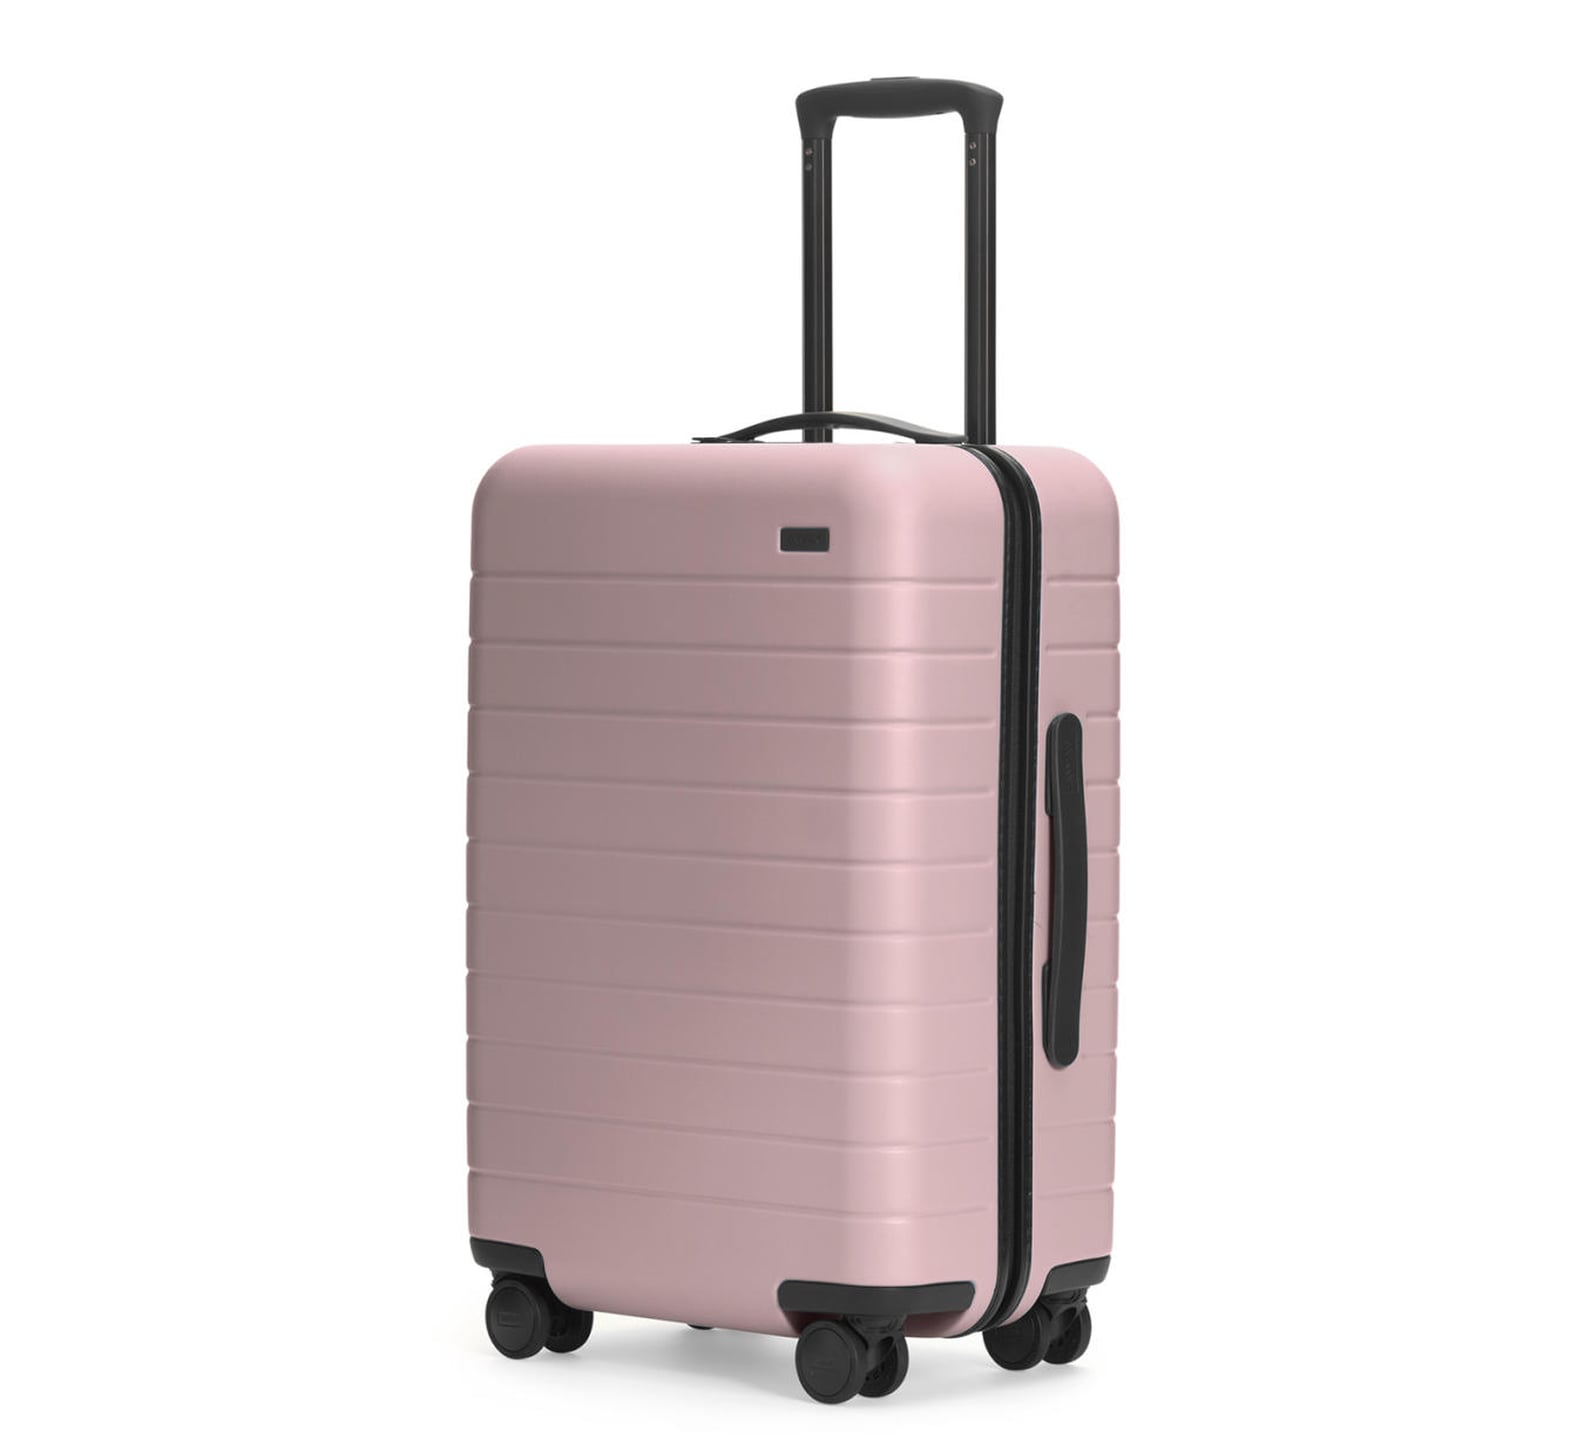 Best Lightweight Luggage | POPSUGAR Smart Living